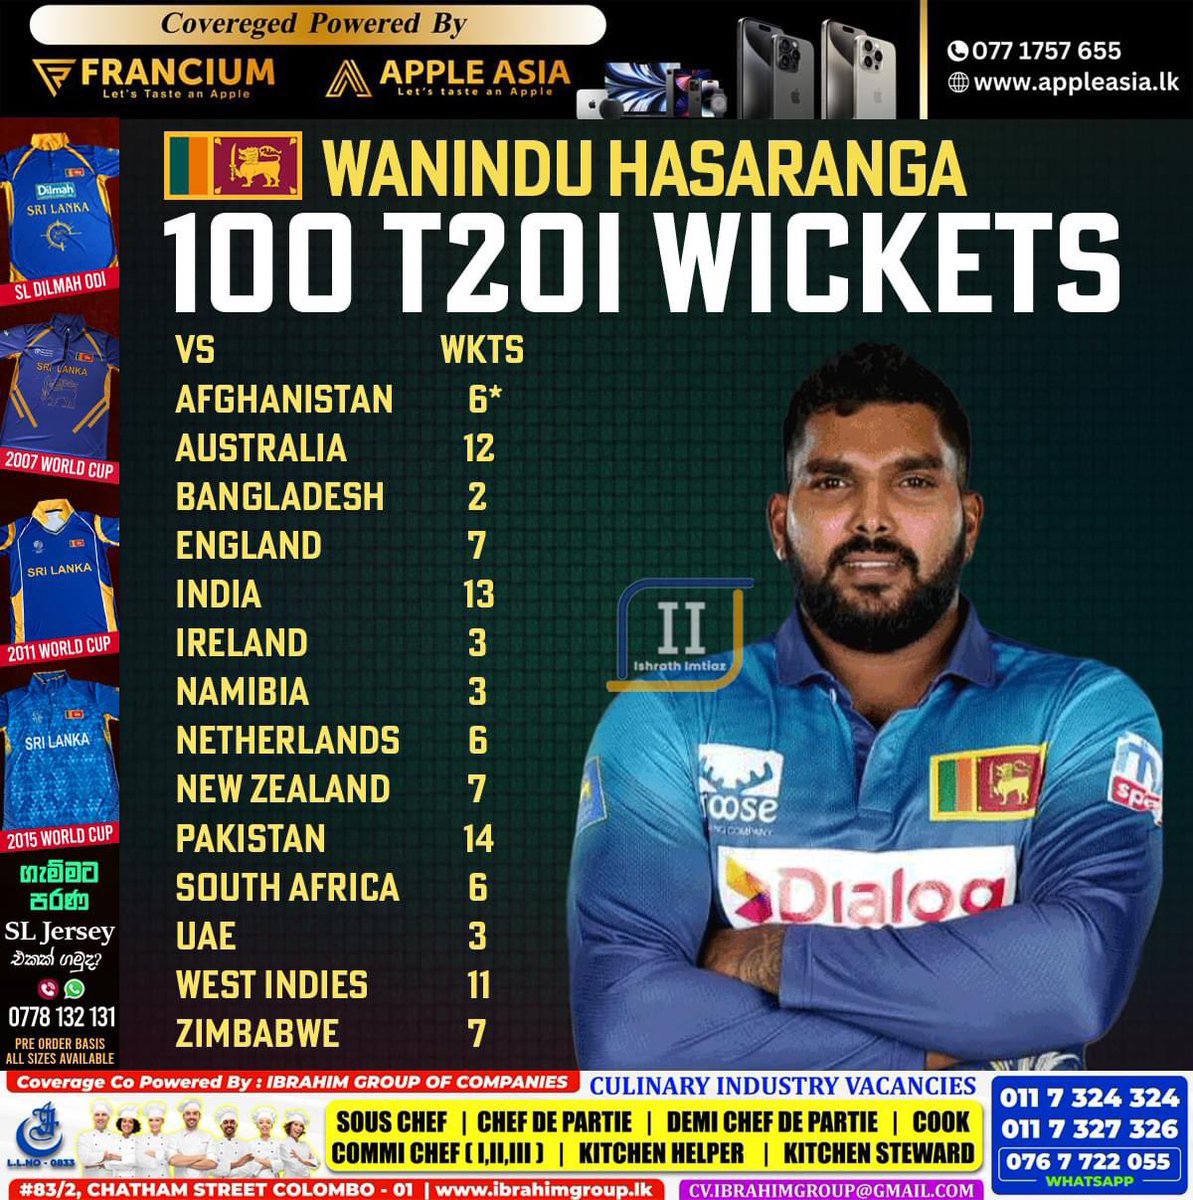 Wanindu Hasaranga's 100 T20I wickets vs different opponents.

#SLvsAFG #SLvAFG